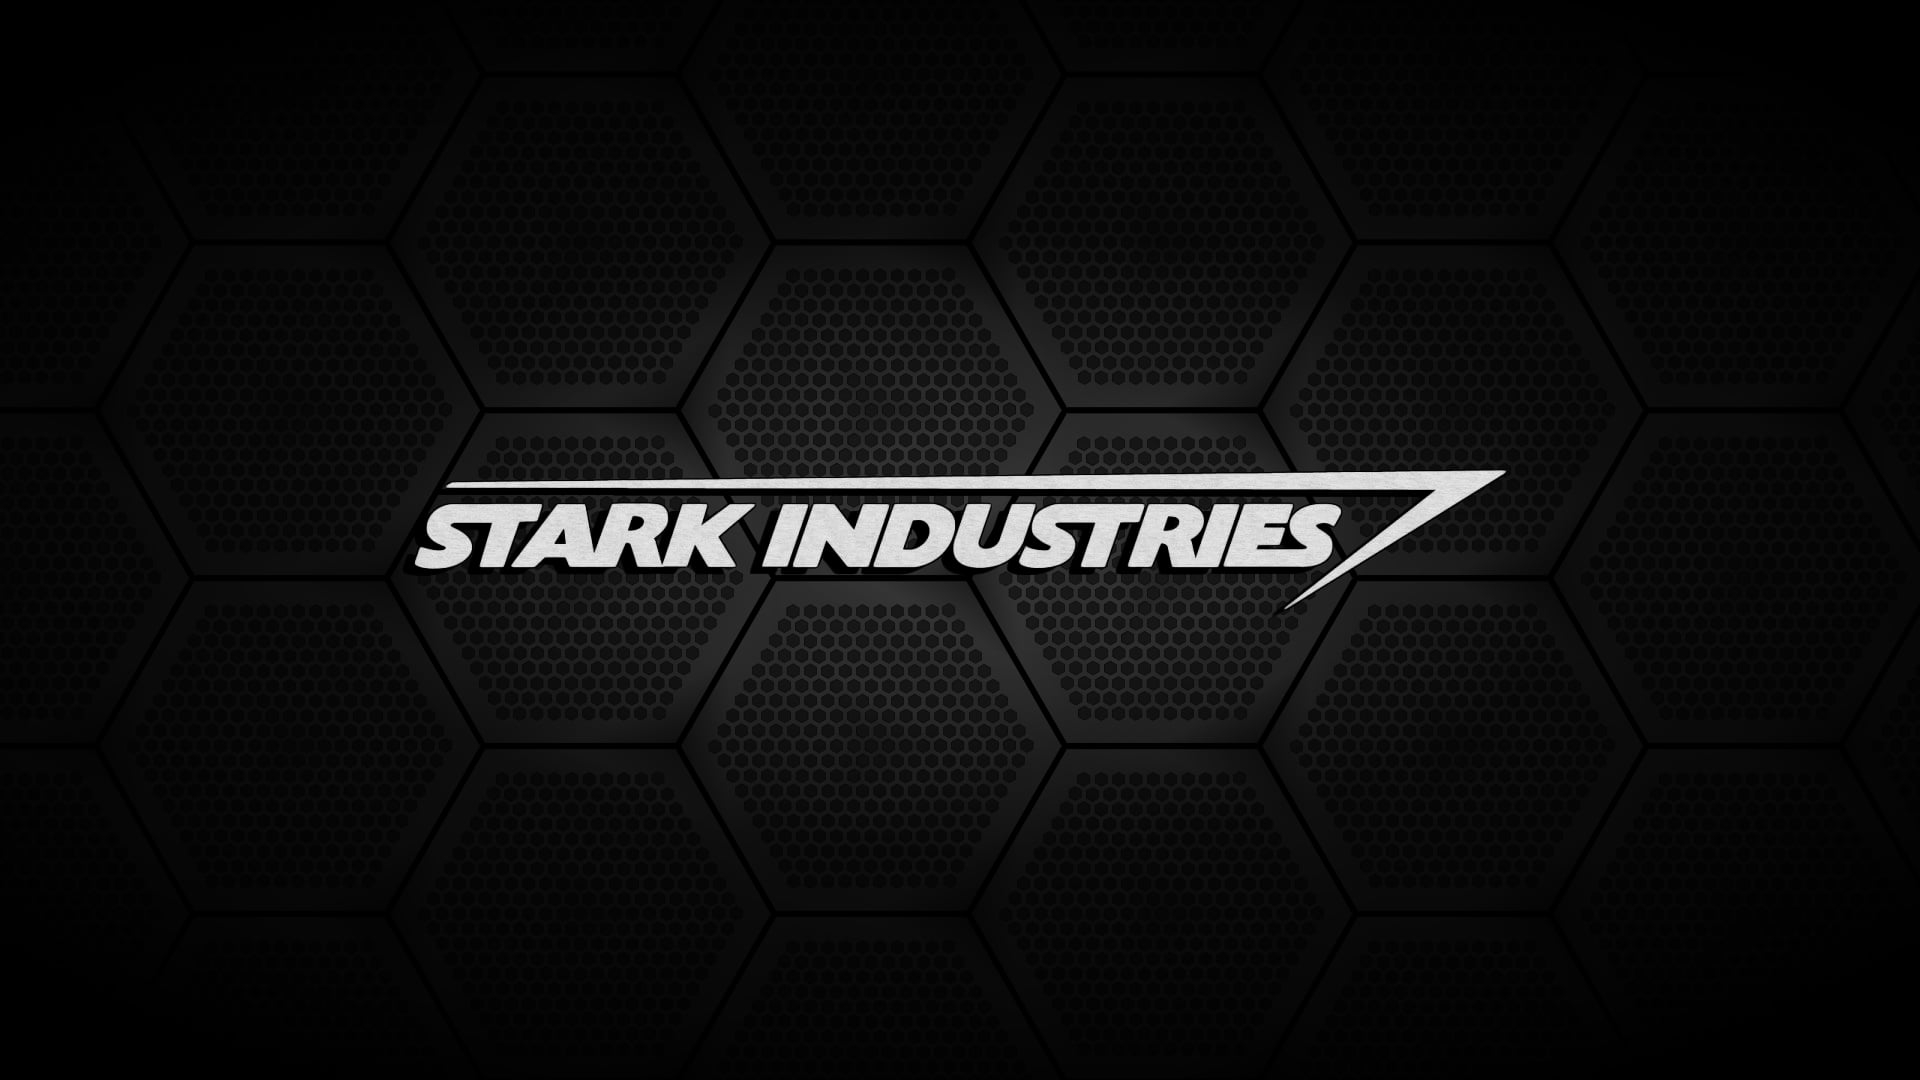 Stark Industries wallpaper Marvel Comics movies Marvel Heroes